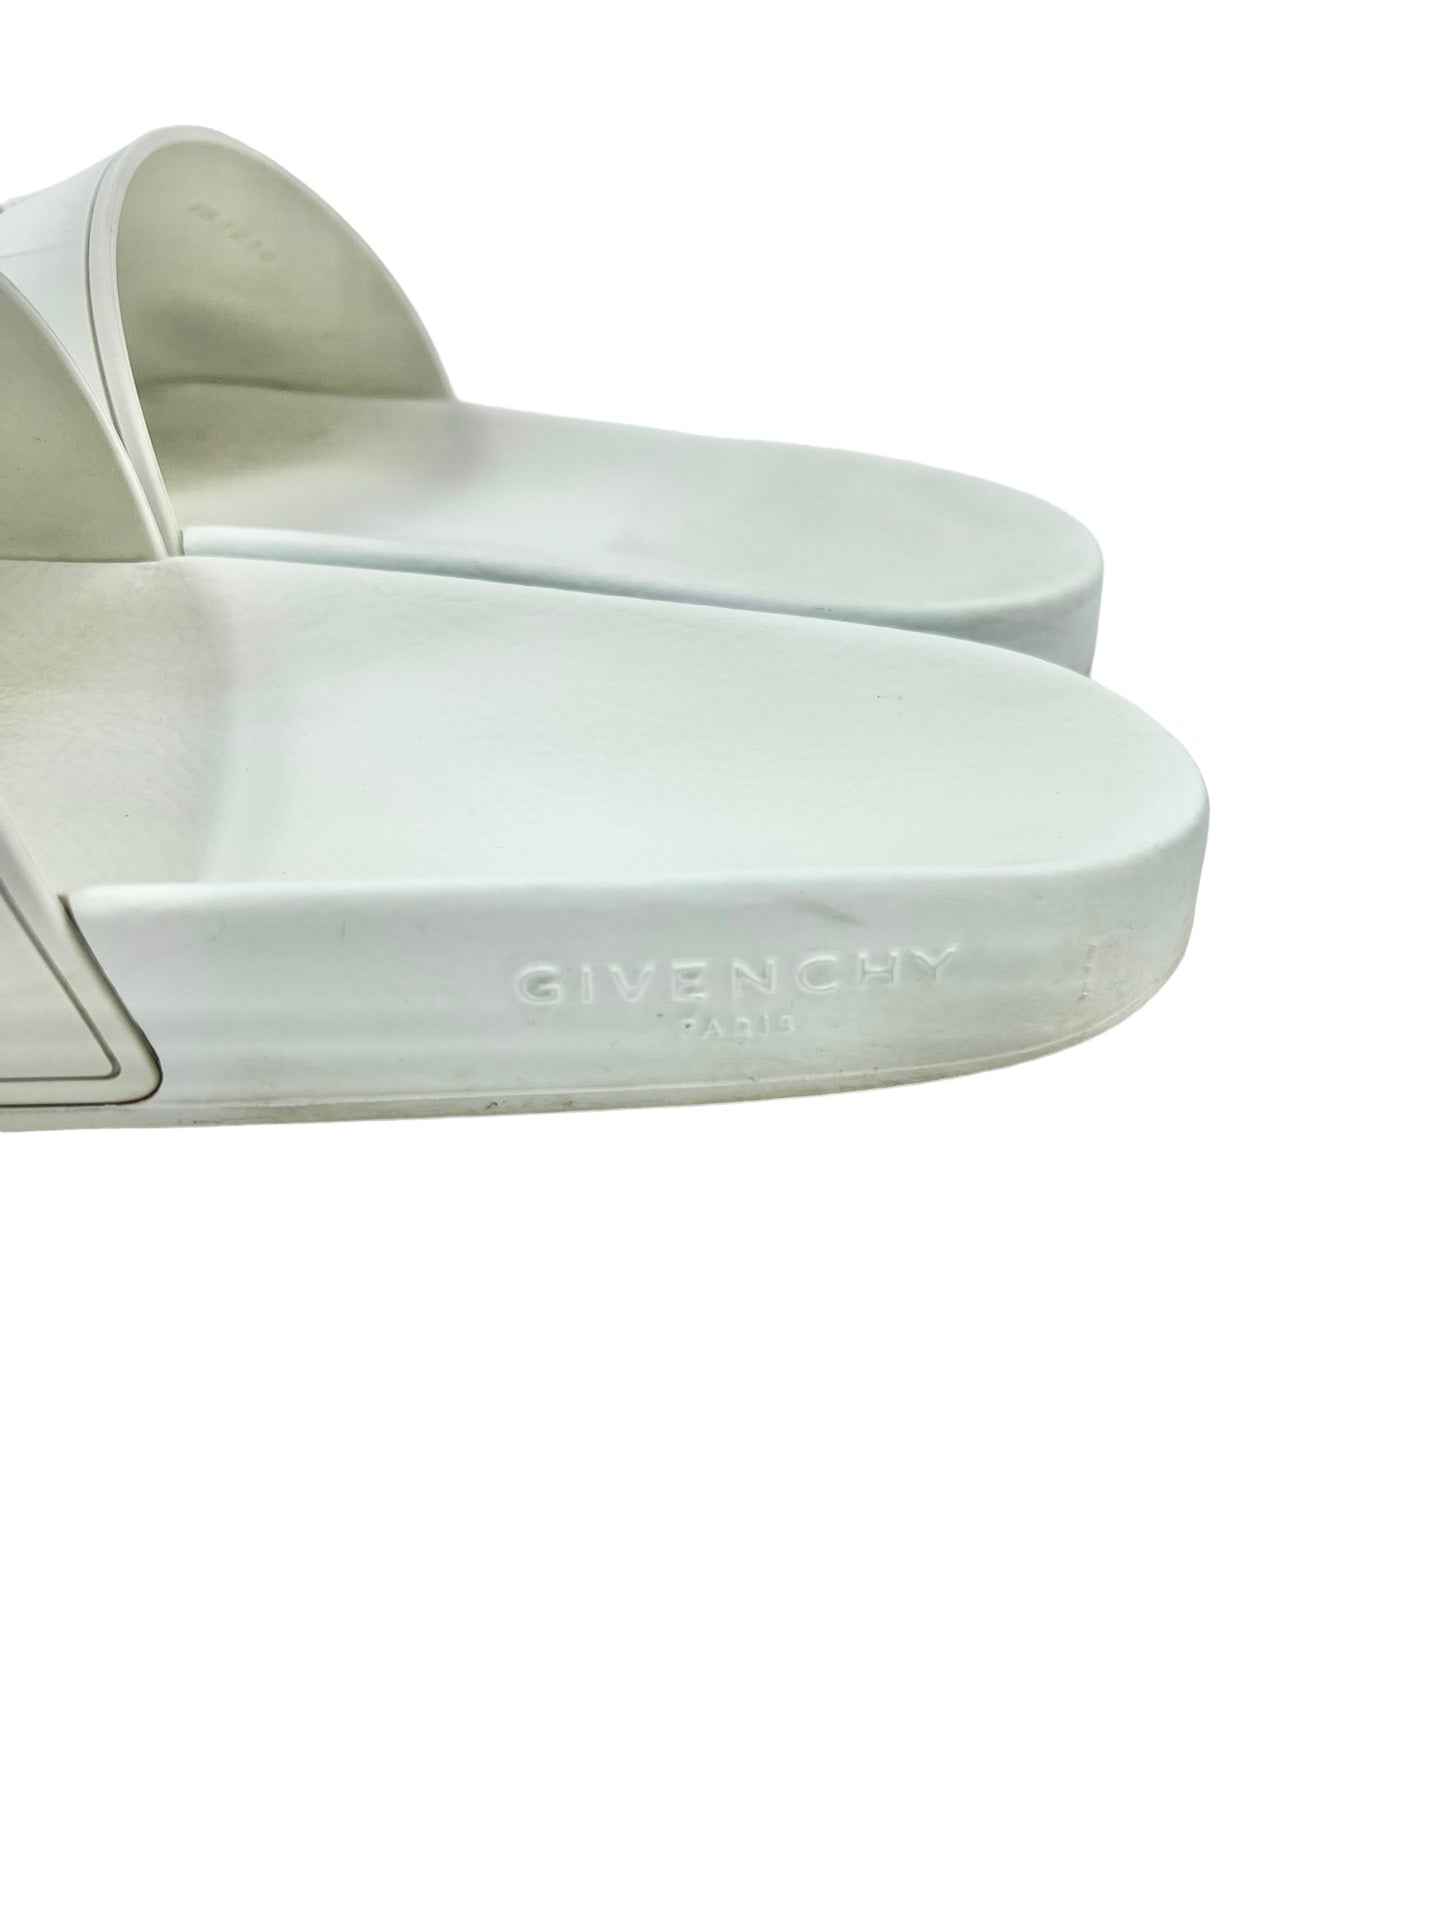 Givenchy Size 41 White Pool Slides